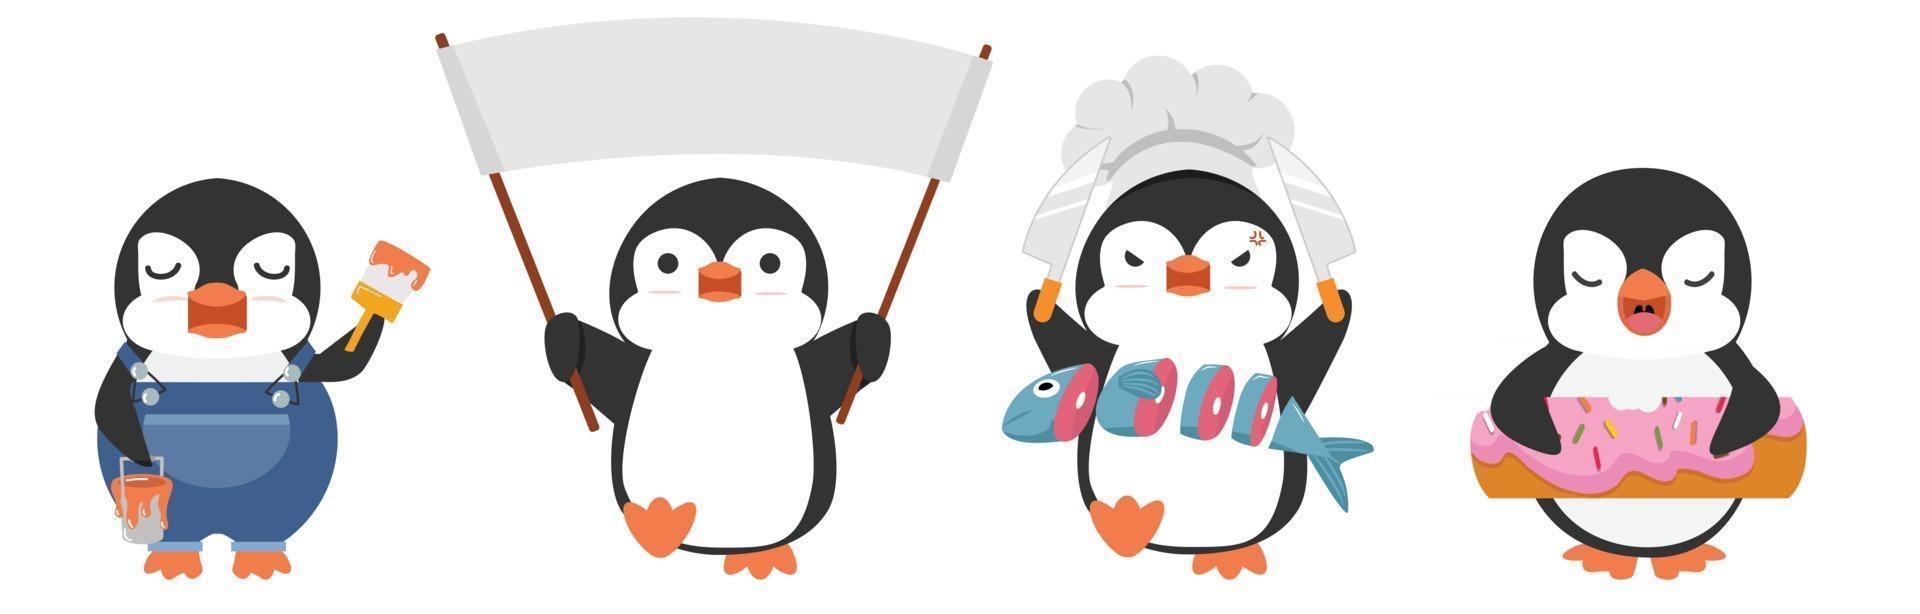 schattige pinguïn stripfiguren instellen vector